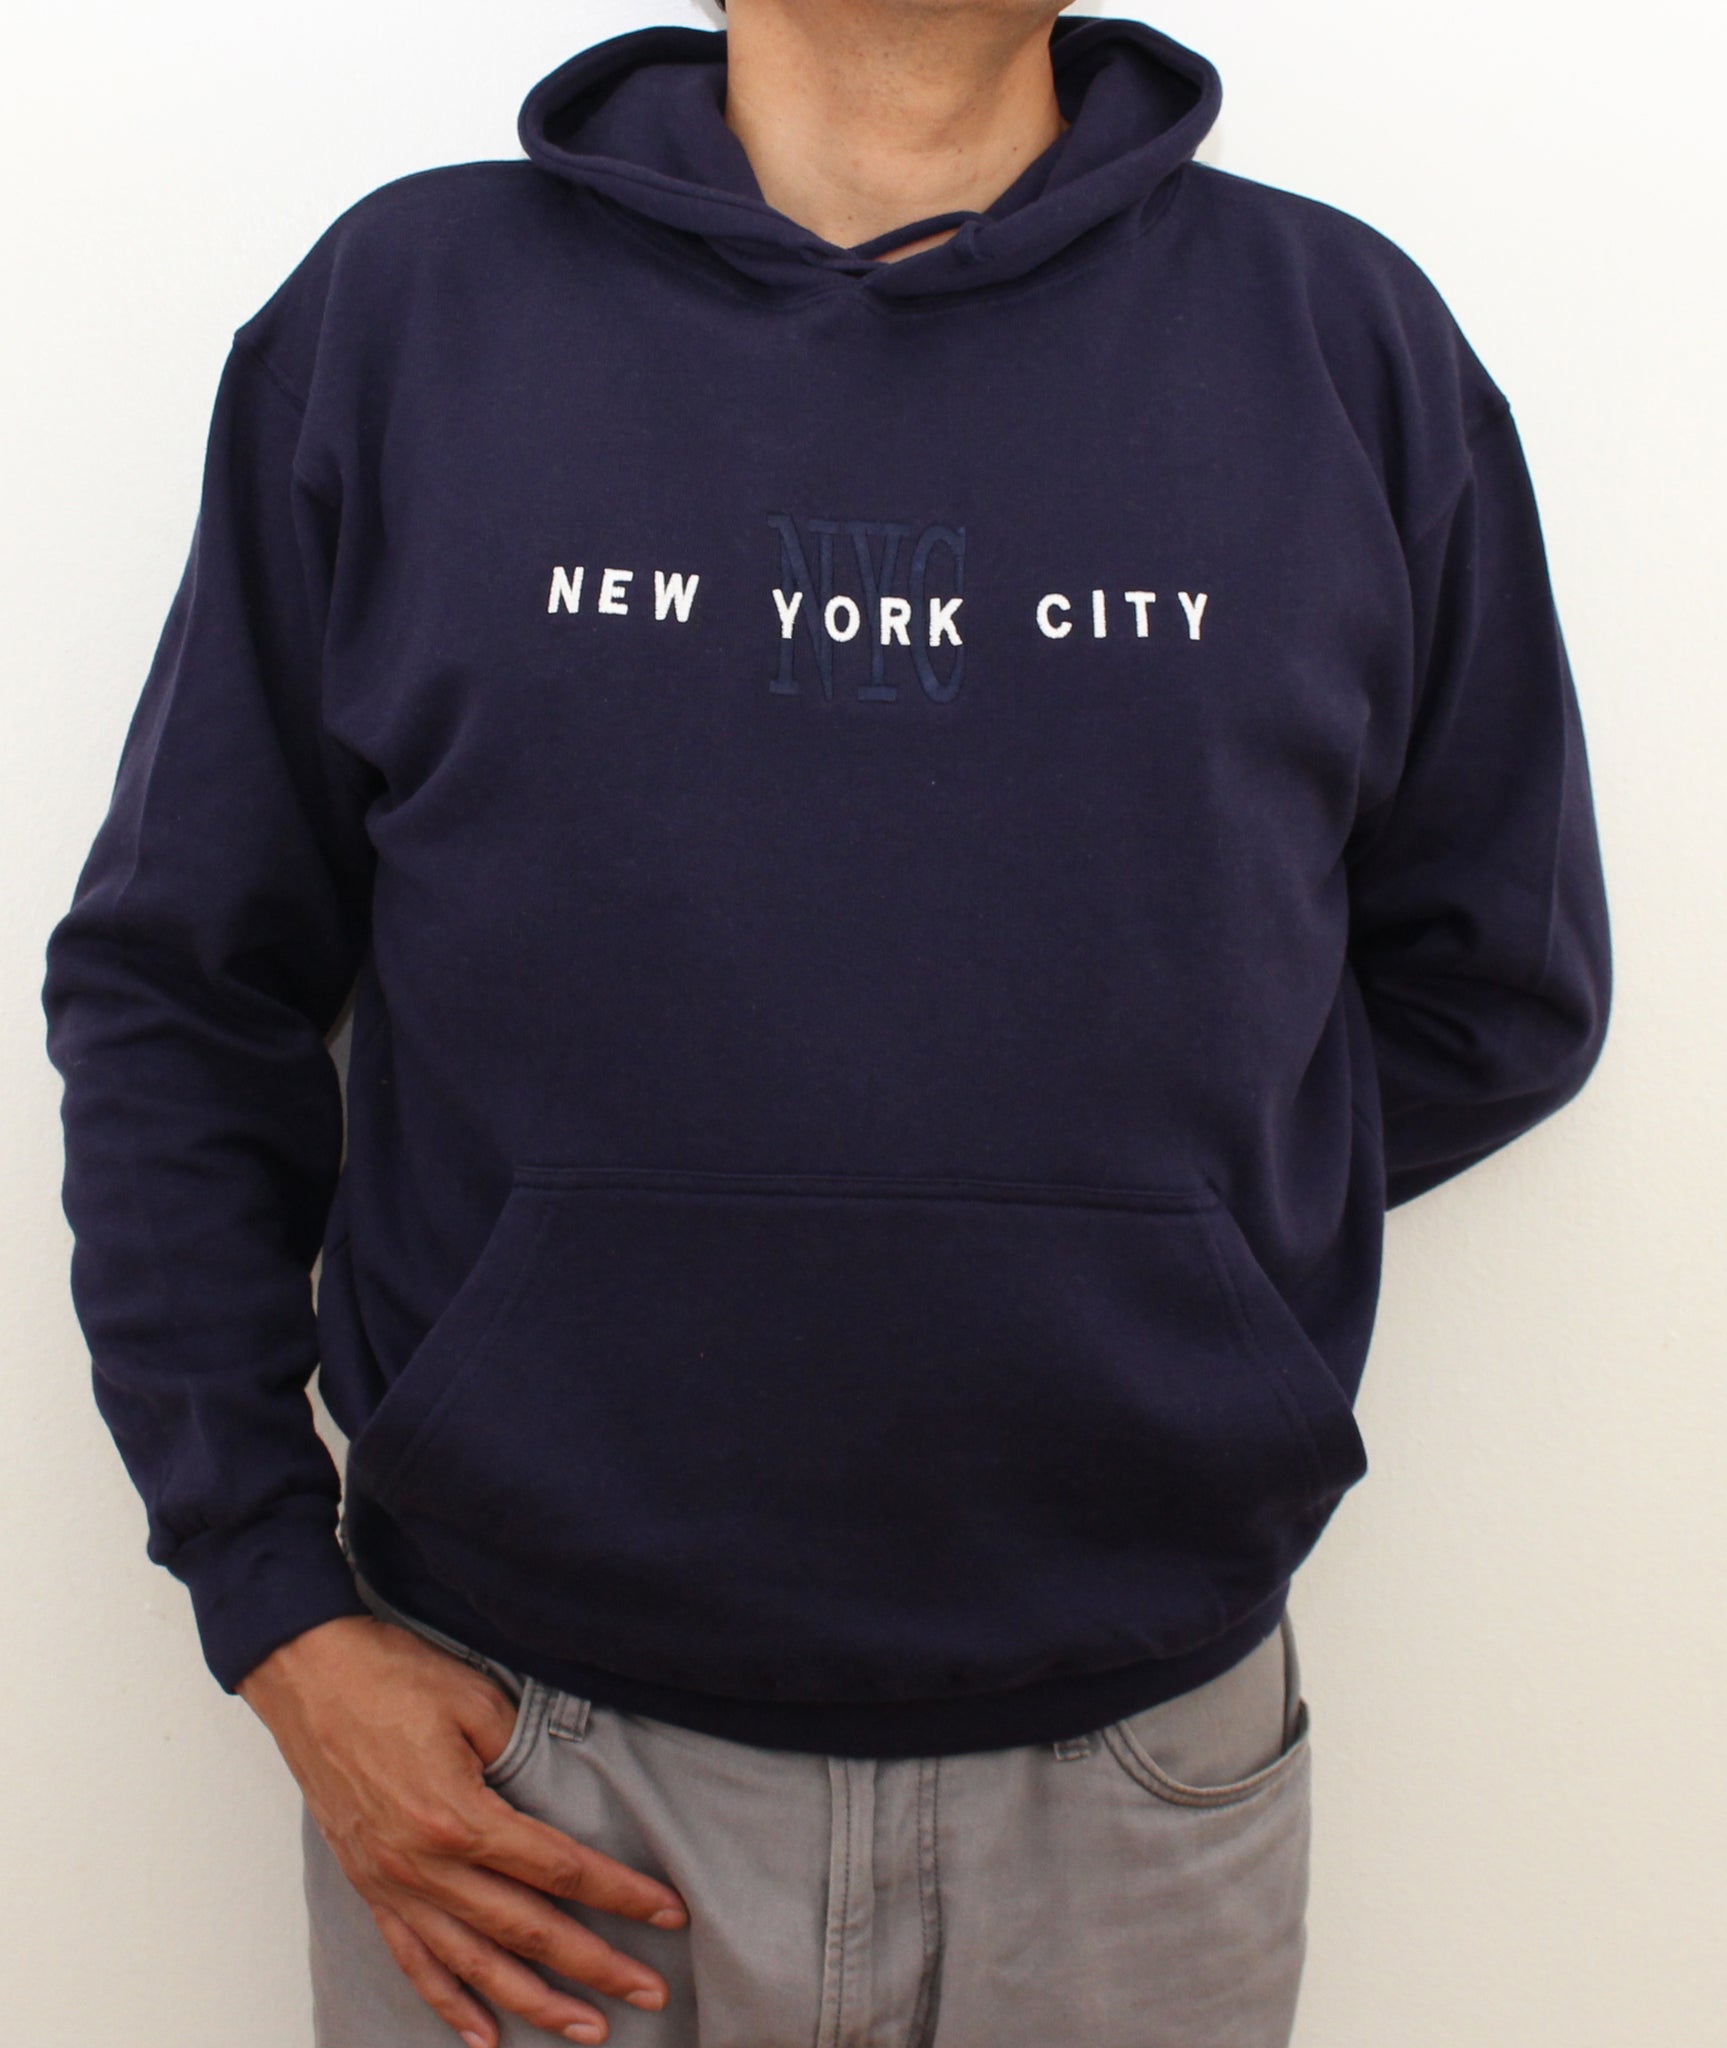 New York Destination Hoodie Sweatshirt